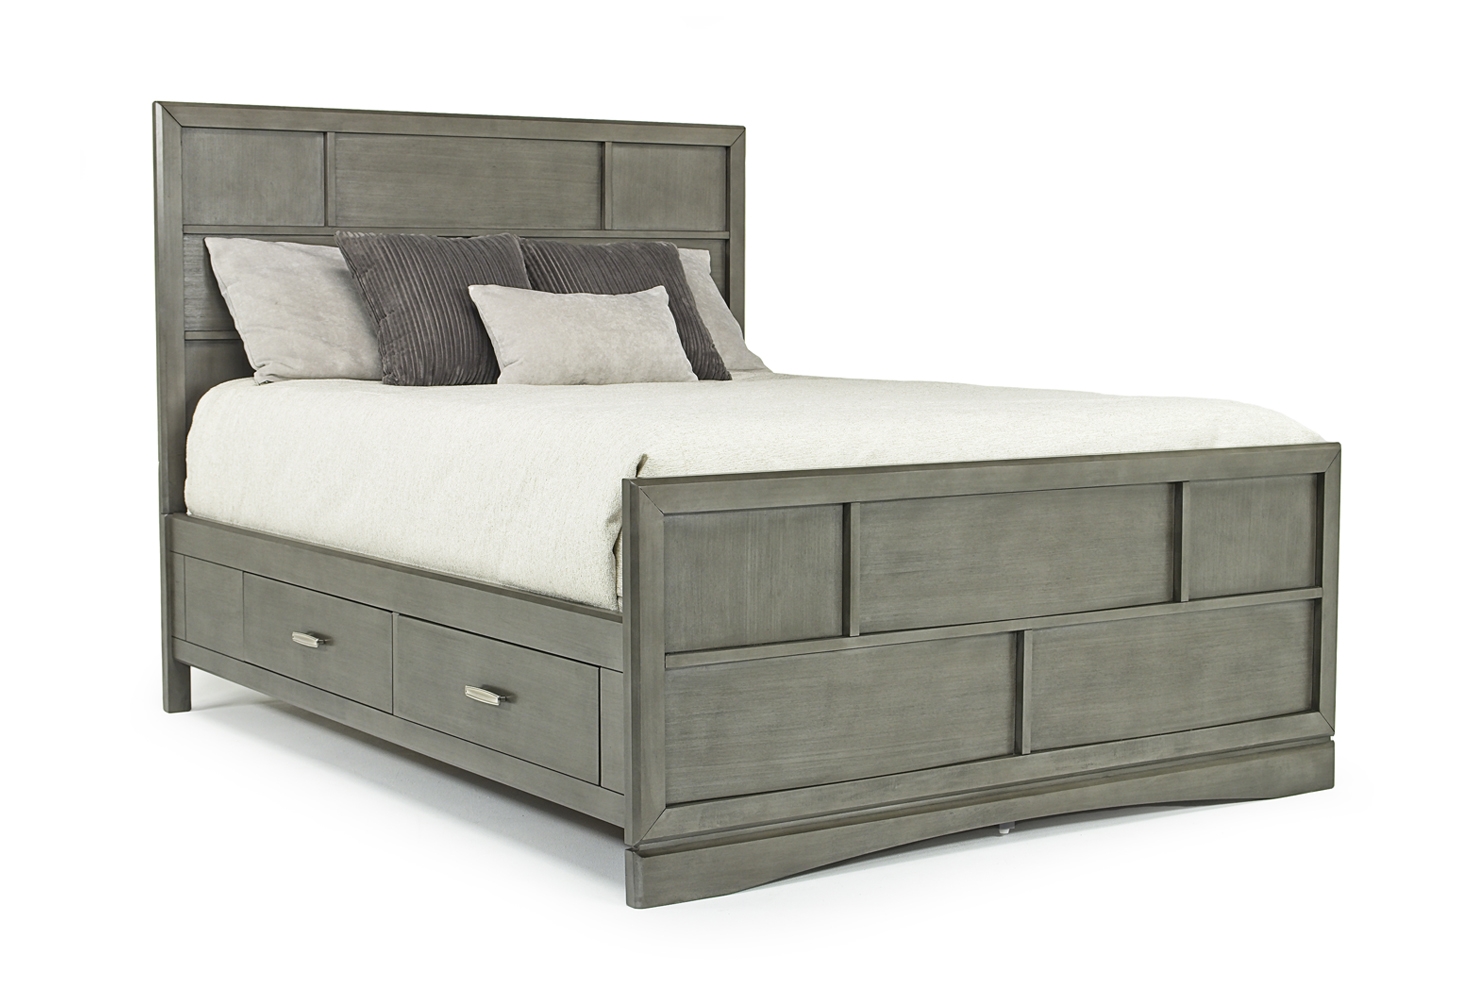 Ontario Panel Bed w/ Storage in Gray, Queen